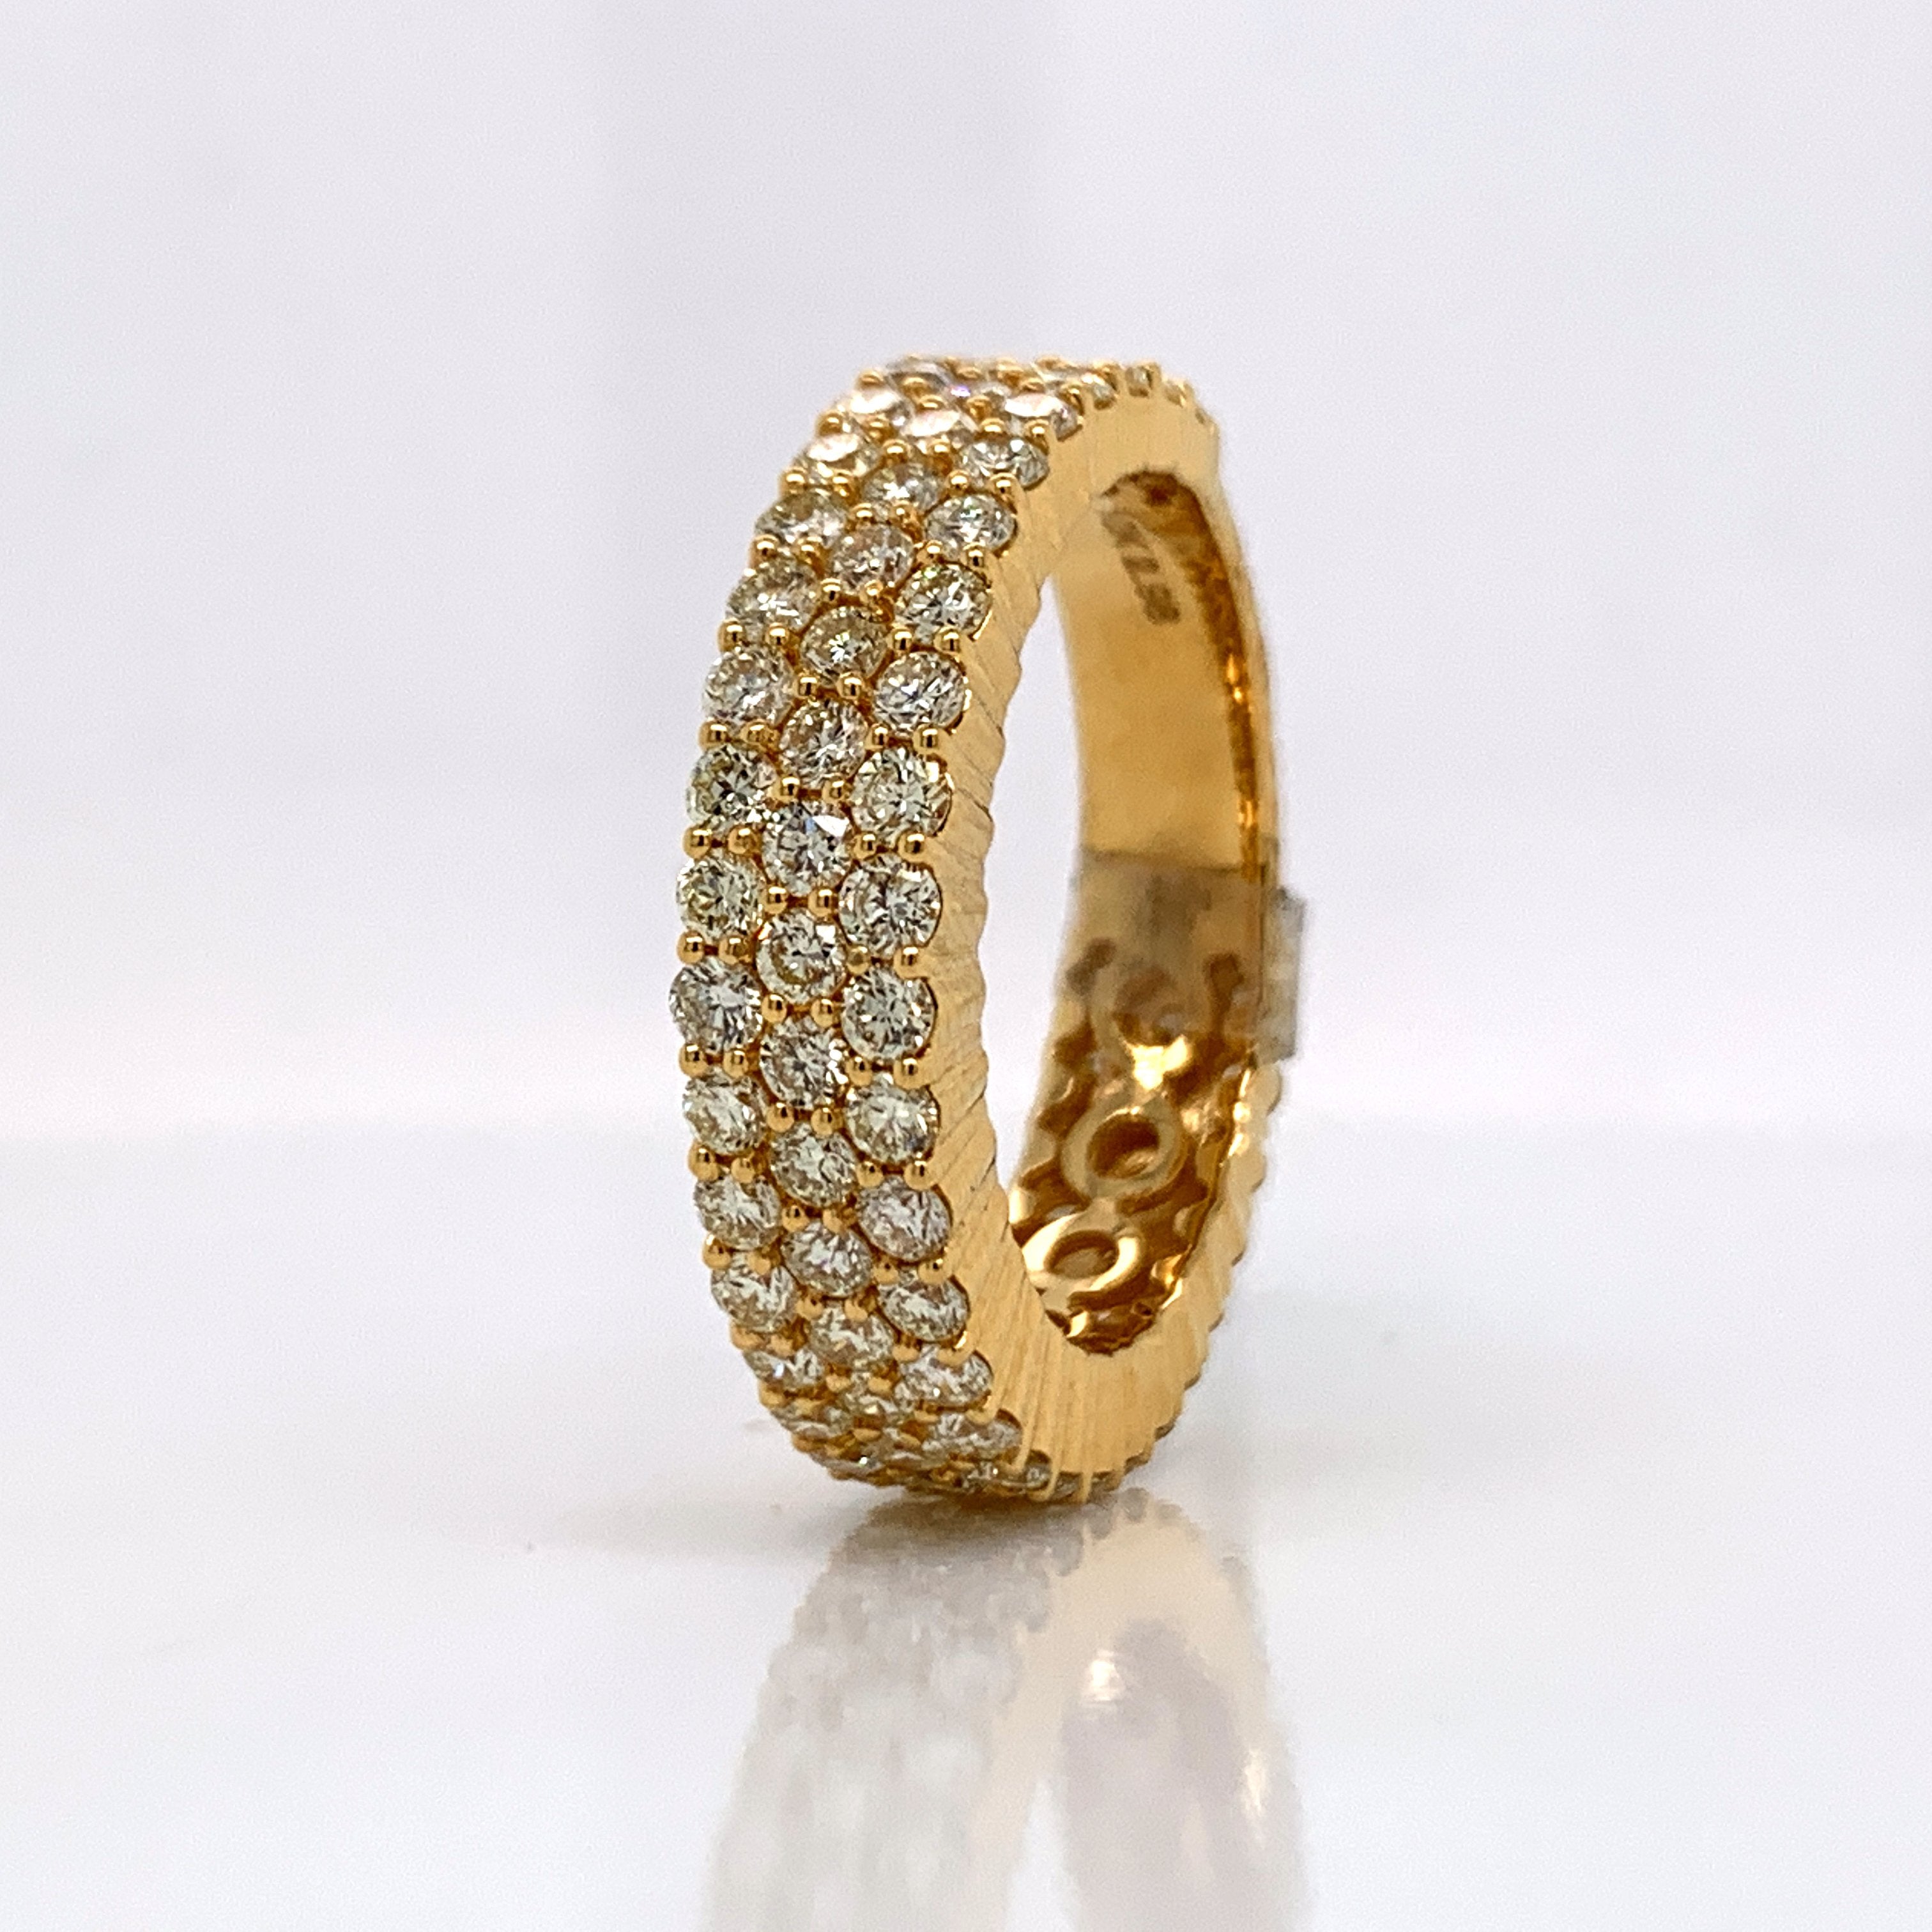 2.98CT Diamond Ring in 10K Gold - White Carat Diamonds 